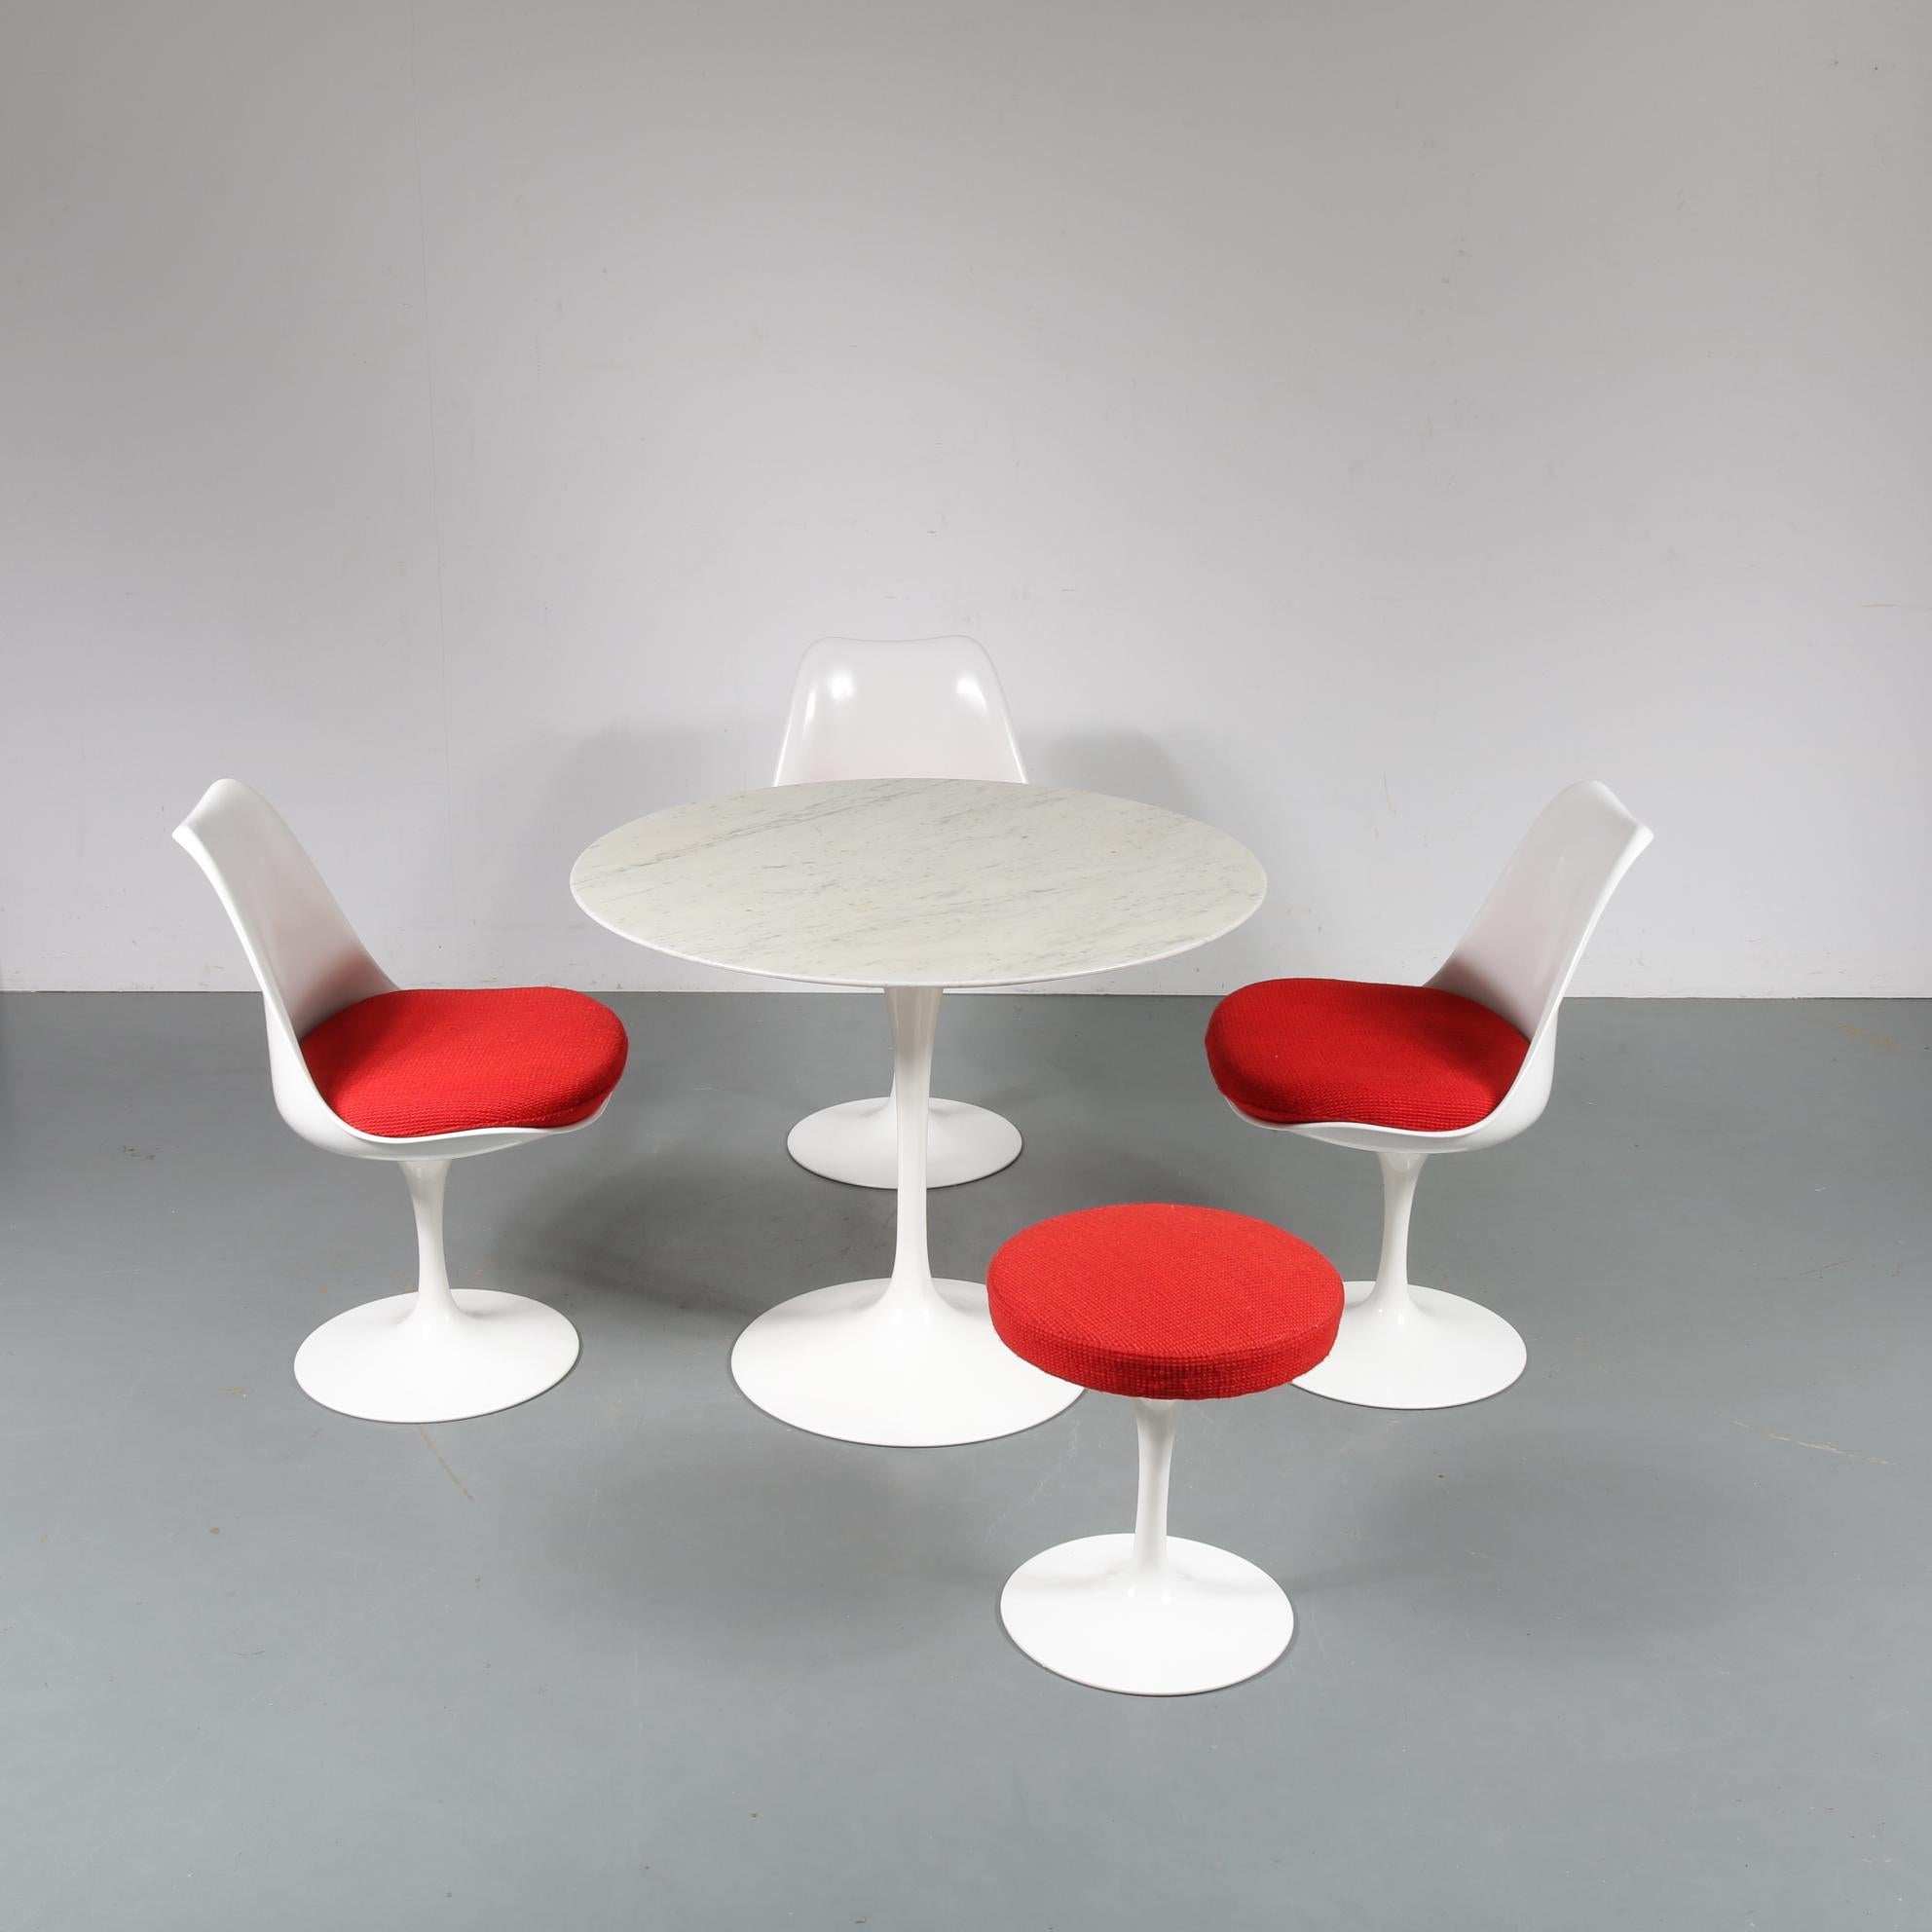 A beautiful dining set designed by Eero Saarinen, model 